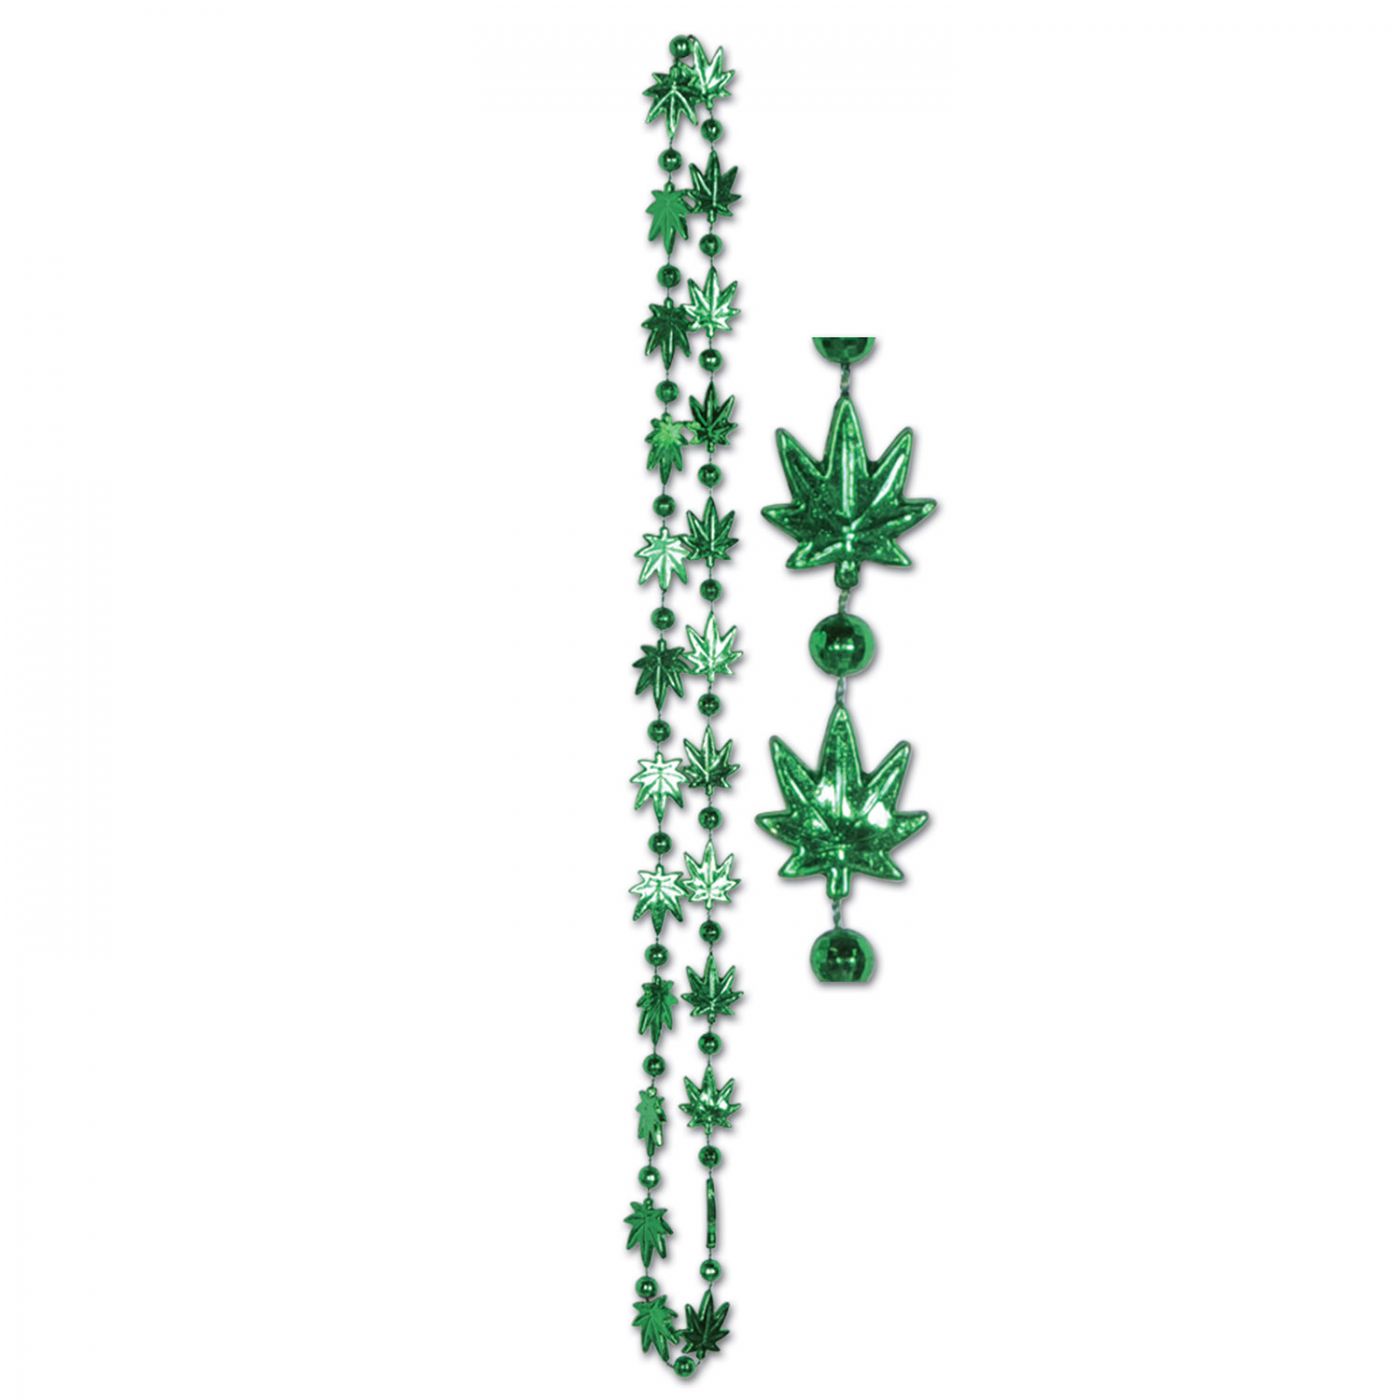 Weed Beads image